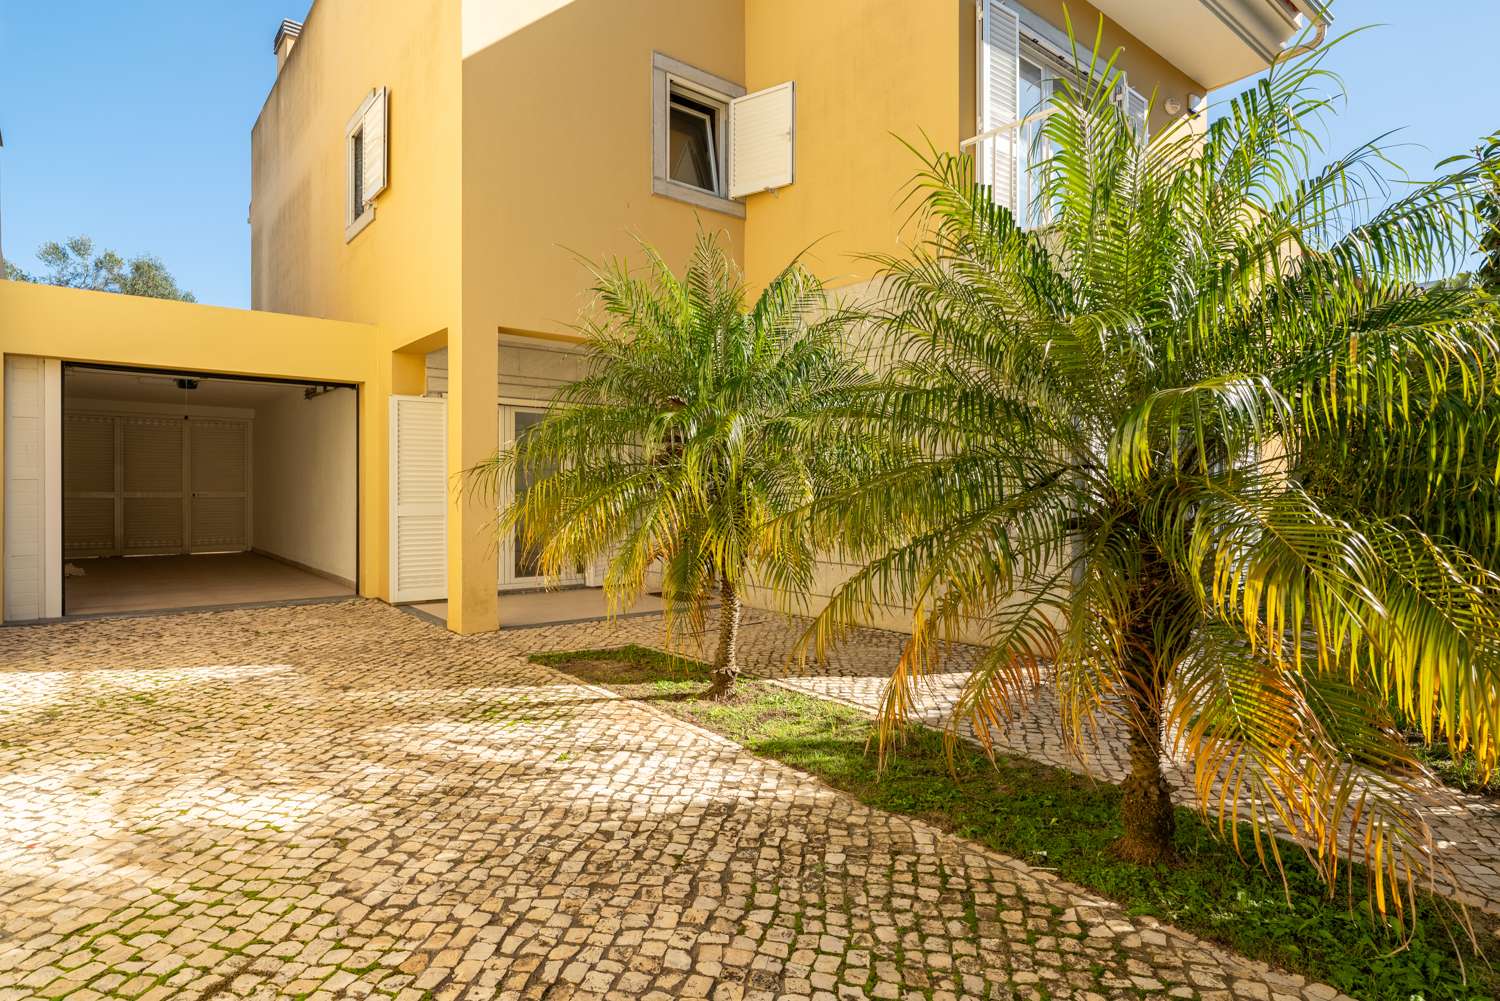 4+2 bedroom villa for rent with garden and swimming pool in Aldeia de Juzo